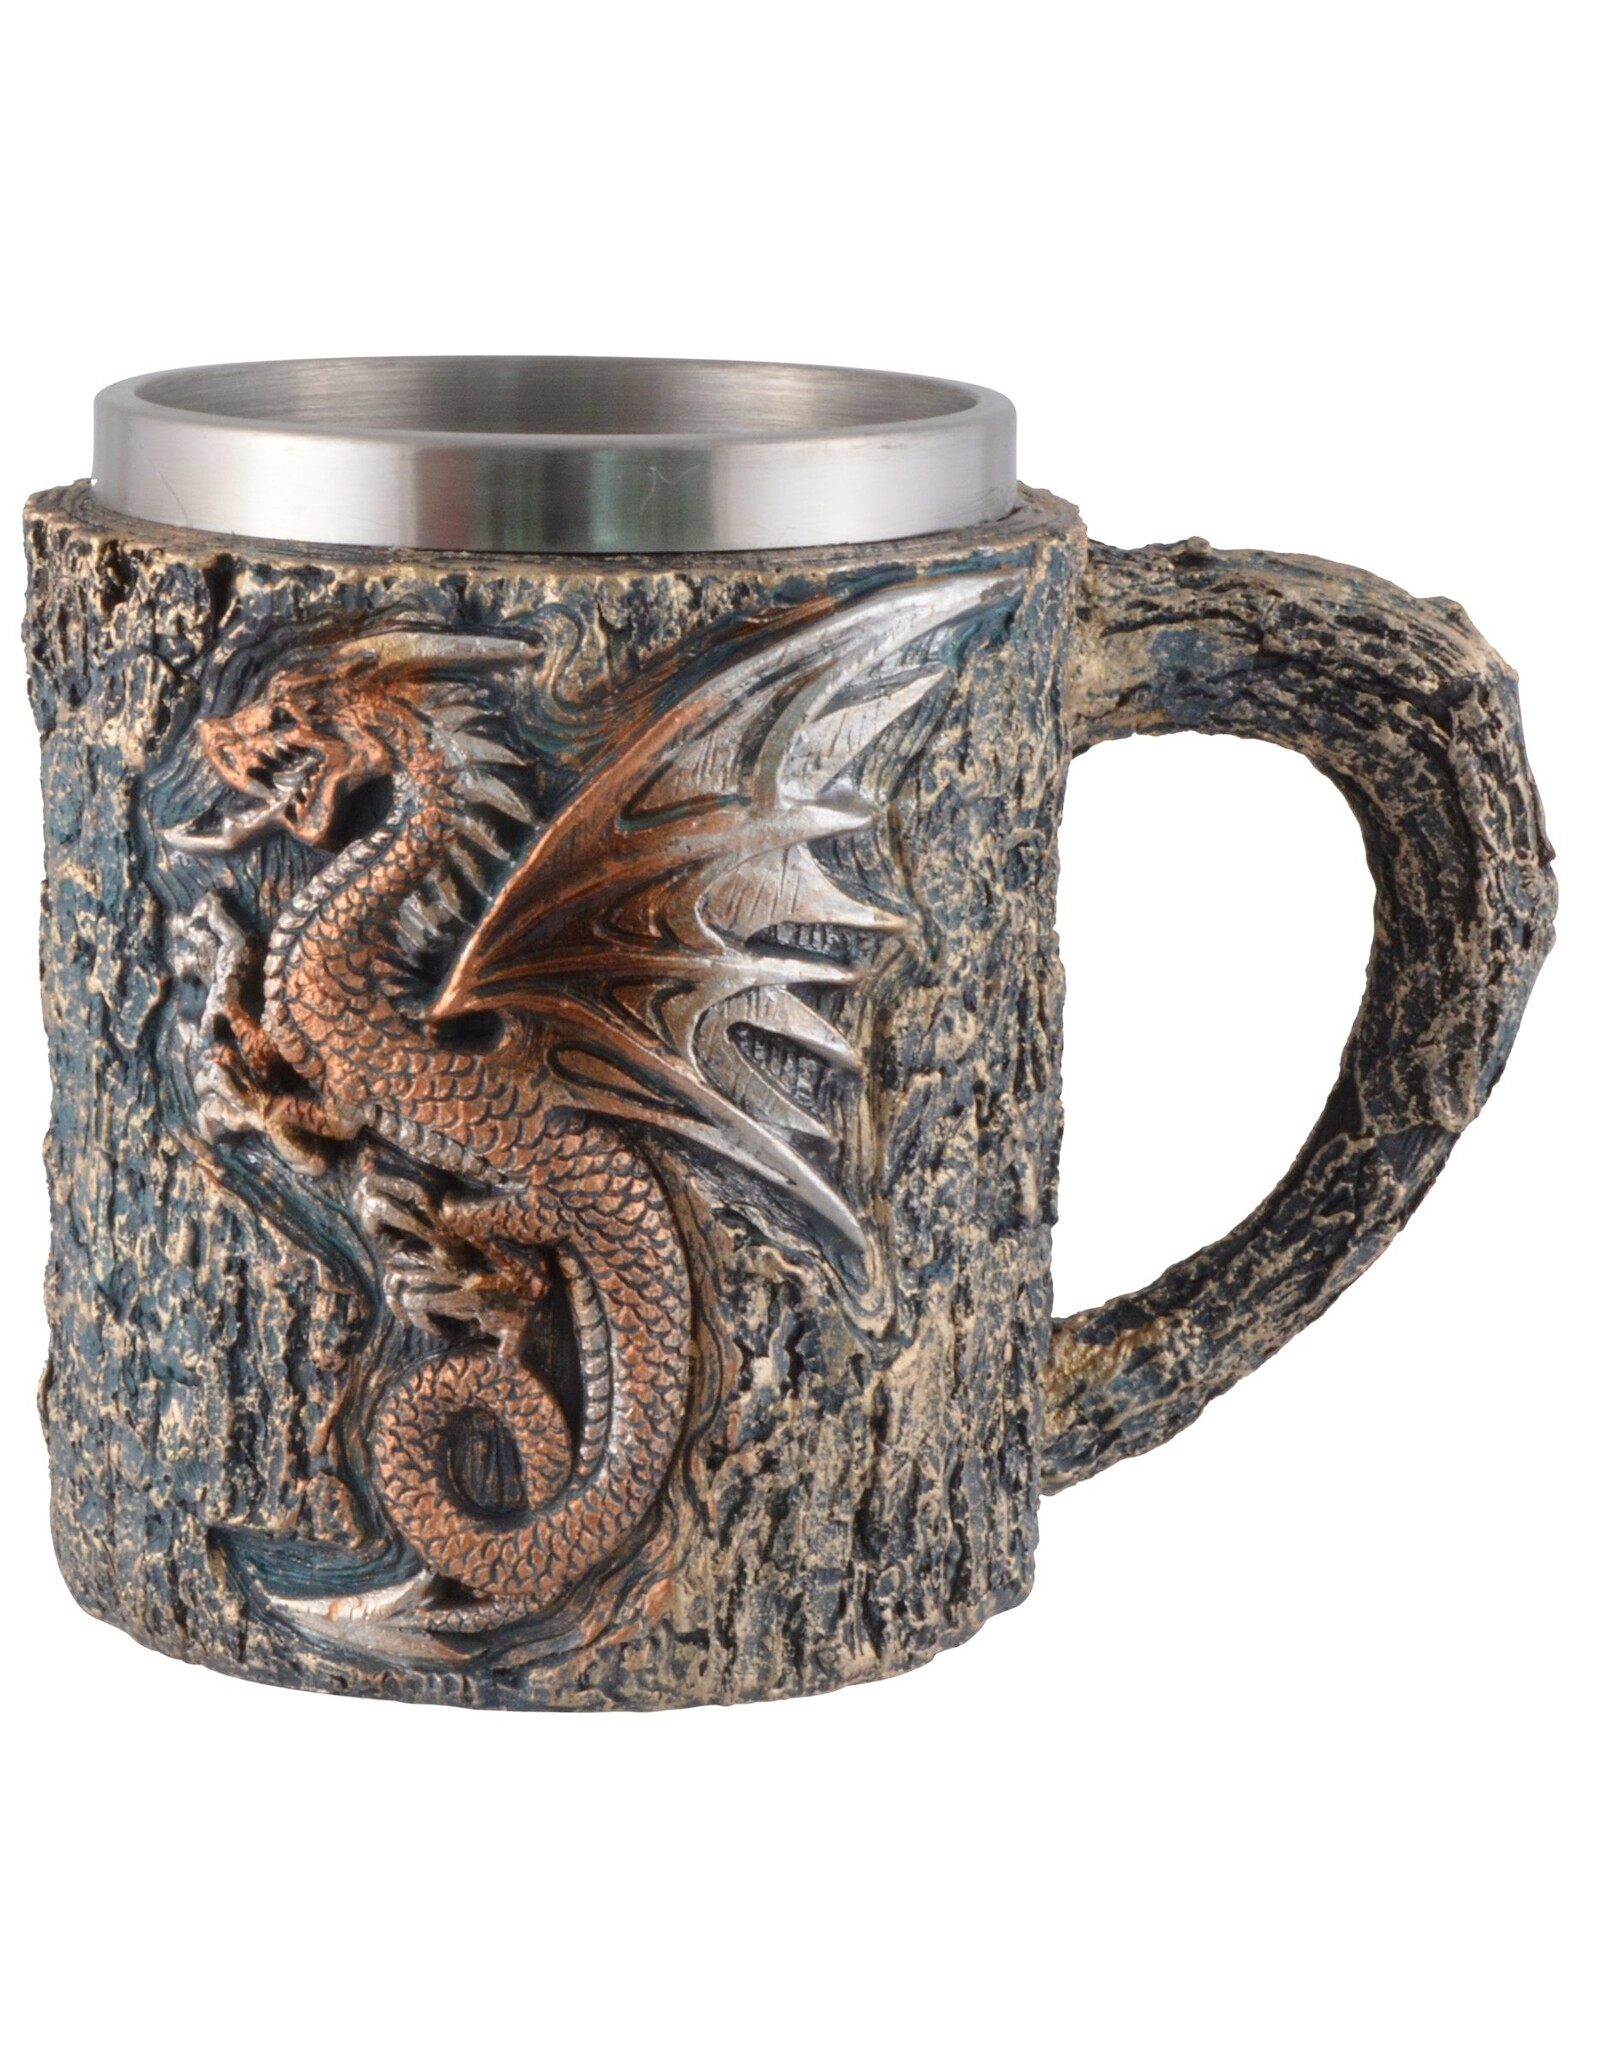 VG Drinkware - Dragon Mug Beer Tankard with Dragon